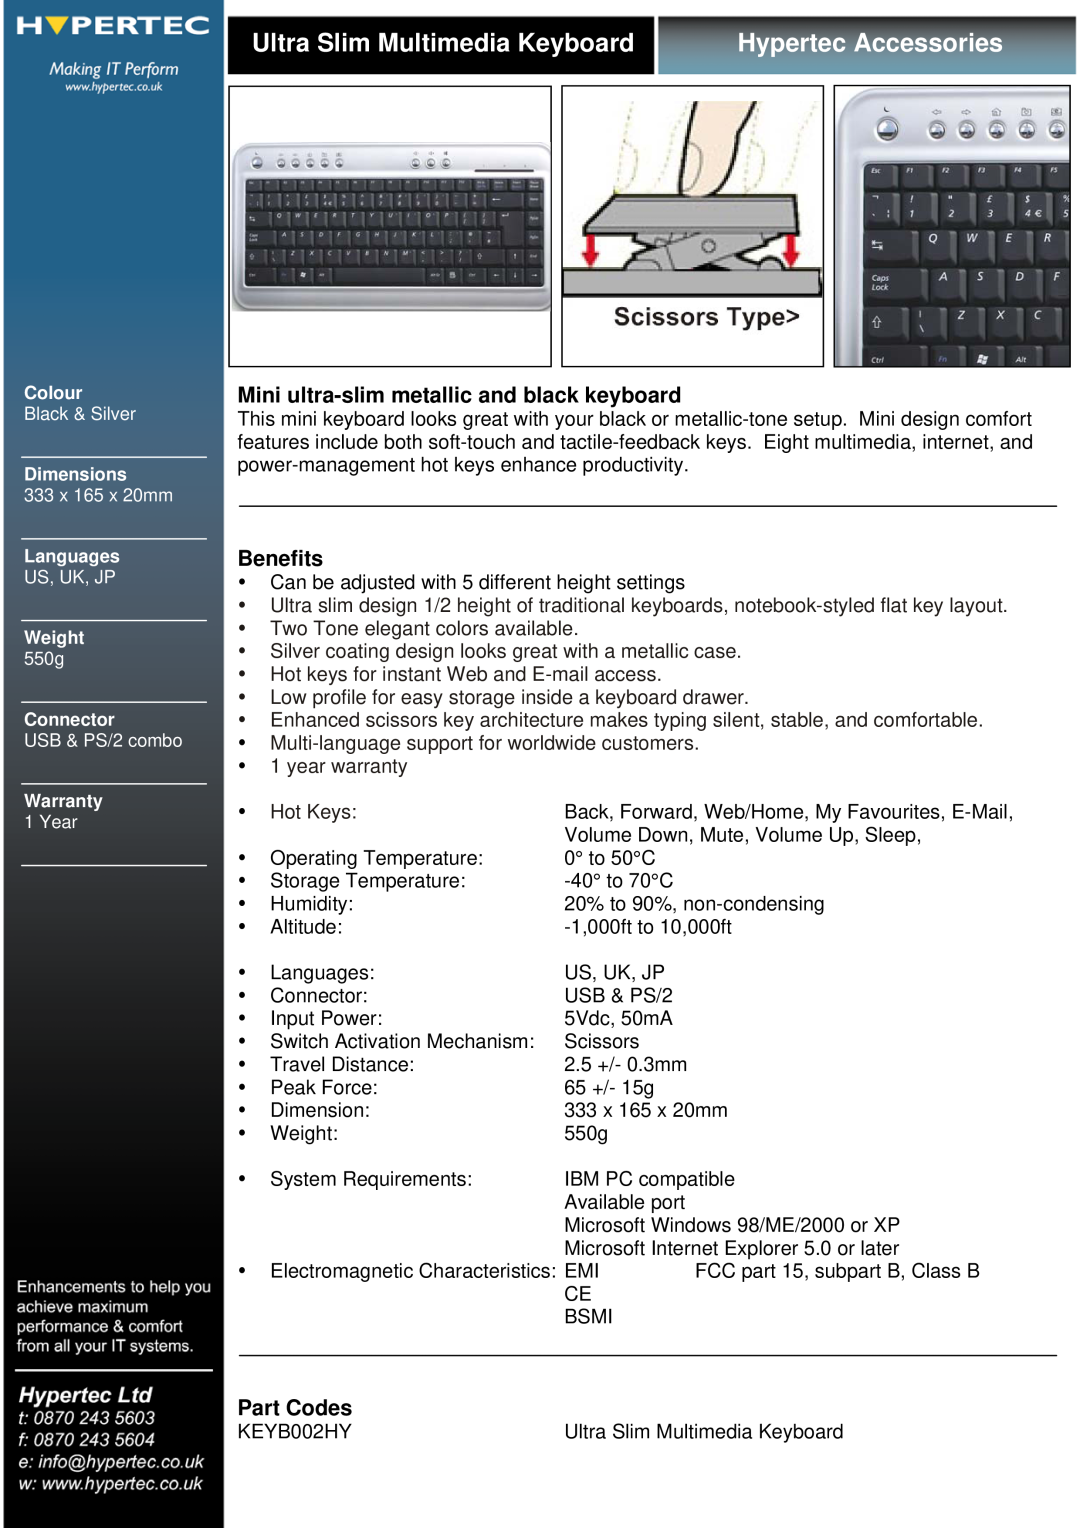 Hypertec KEYB002HY dimensions Ultra Slim Multimedia Keyboard, Hypertec Accessories, Benefits, Part Codes, Hot Keys 